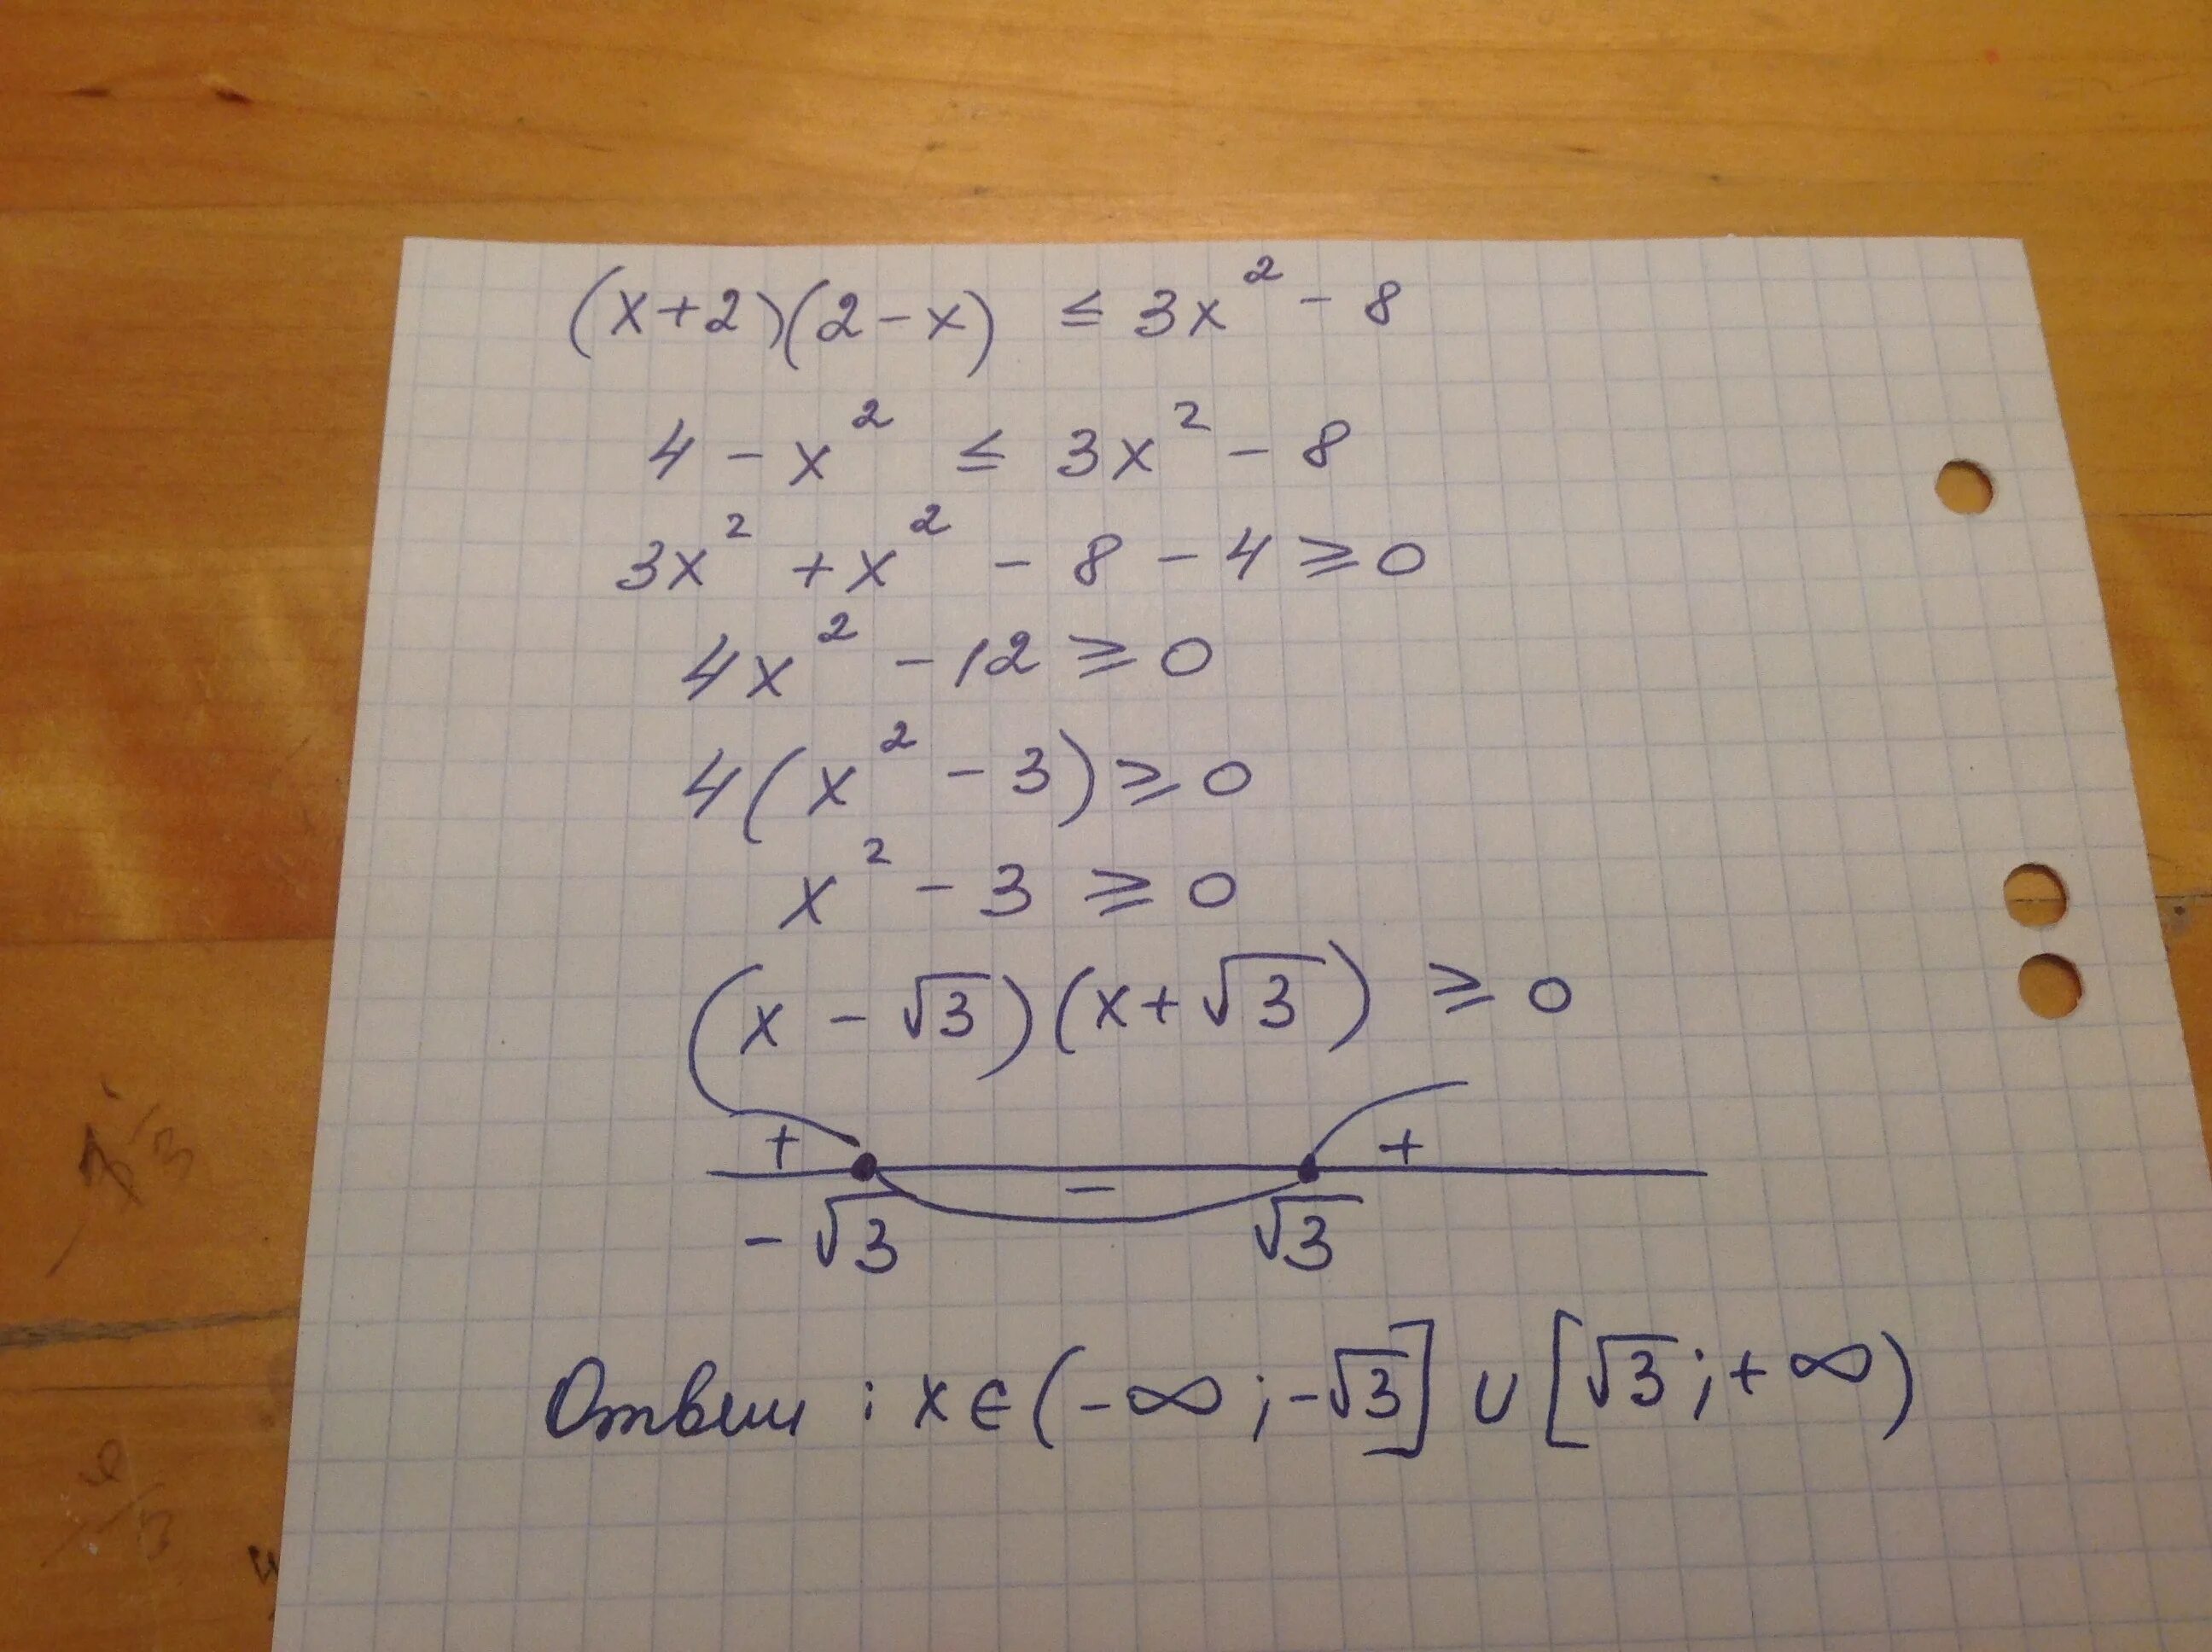 4 5 5x 2 меньше 8. X2-3x+2 меньше или равно 0. X^2+2x-3 меньше равно 0. 3x-x2 меньше или равно 0. X (3-X) (2+X) меньше или равно 0.